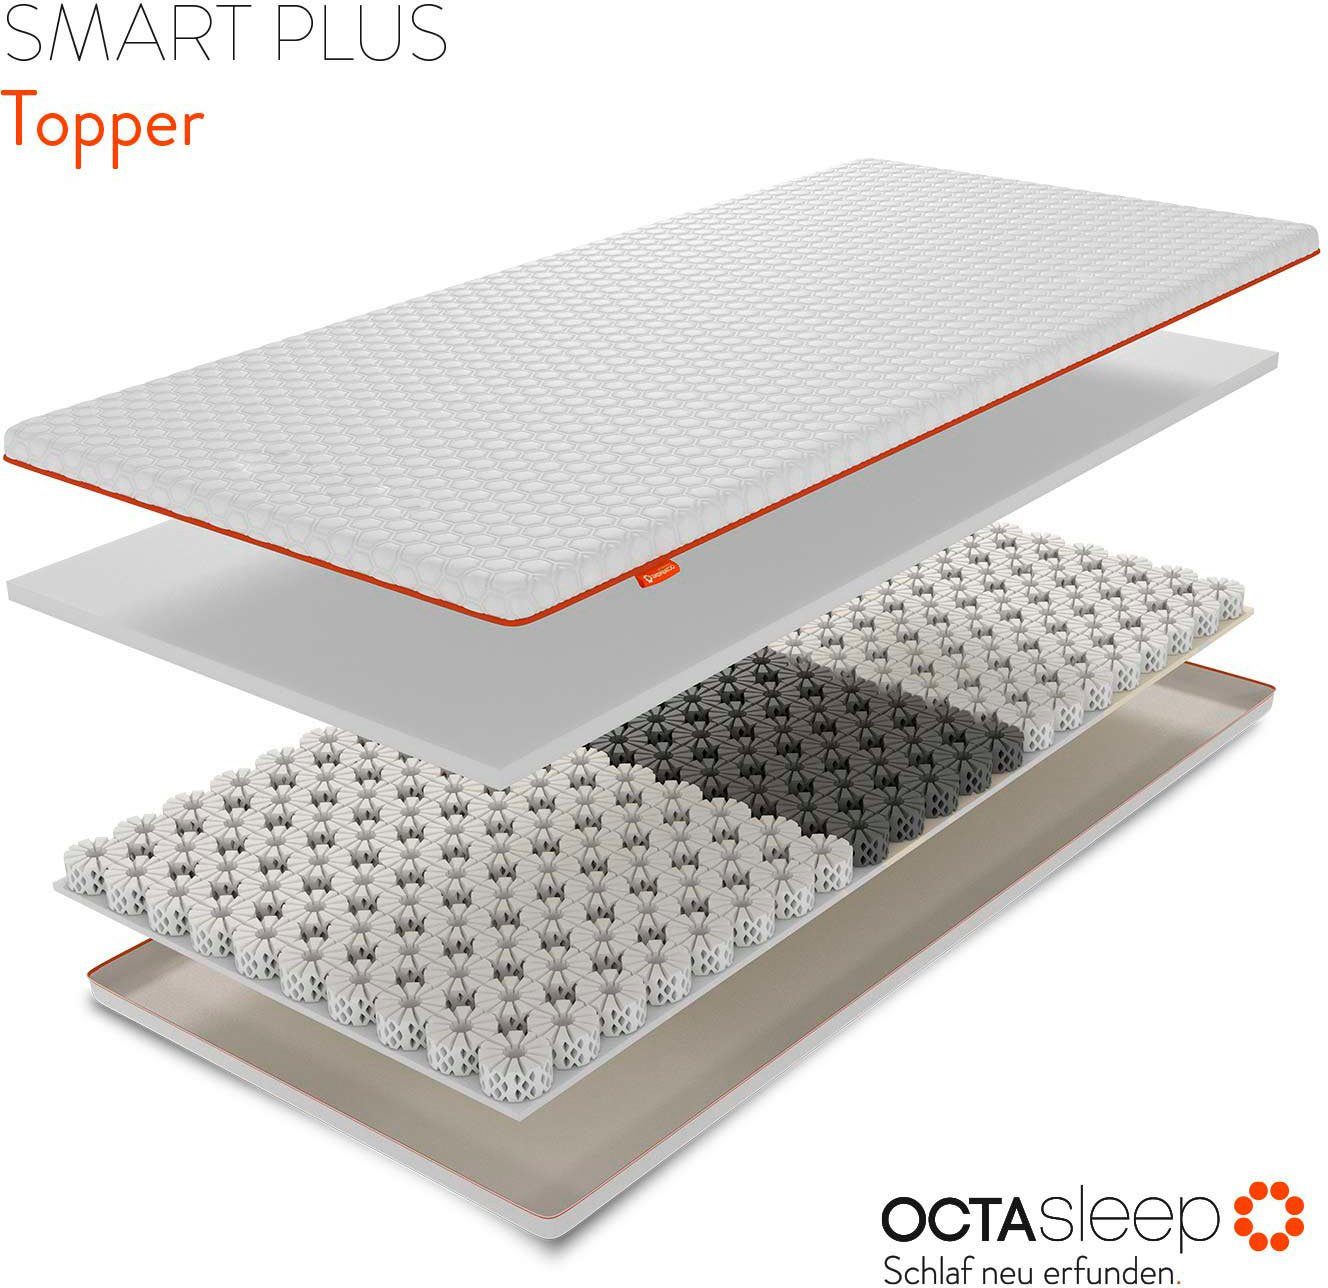 Topper Octasleep Smart Plus Topper, OCTAsleep, 7 cm hoch, Kaltschaum,  Komfortschaum, Viscoschaum, OCTAspring® Aerospace Technologie